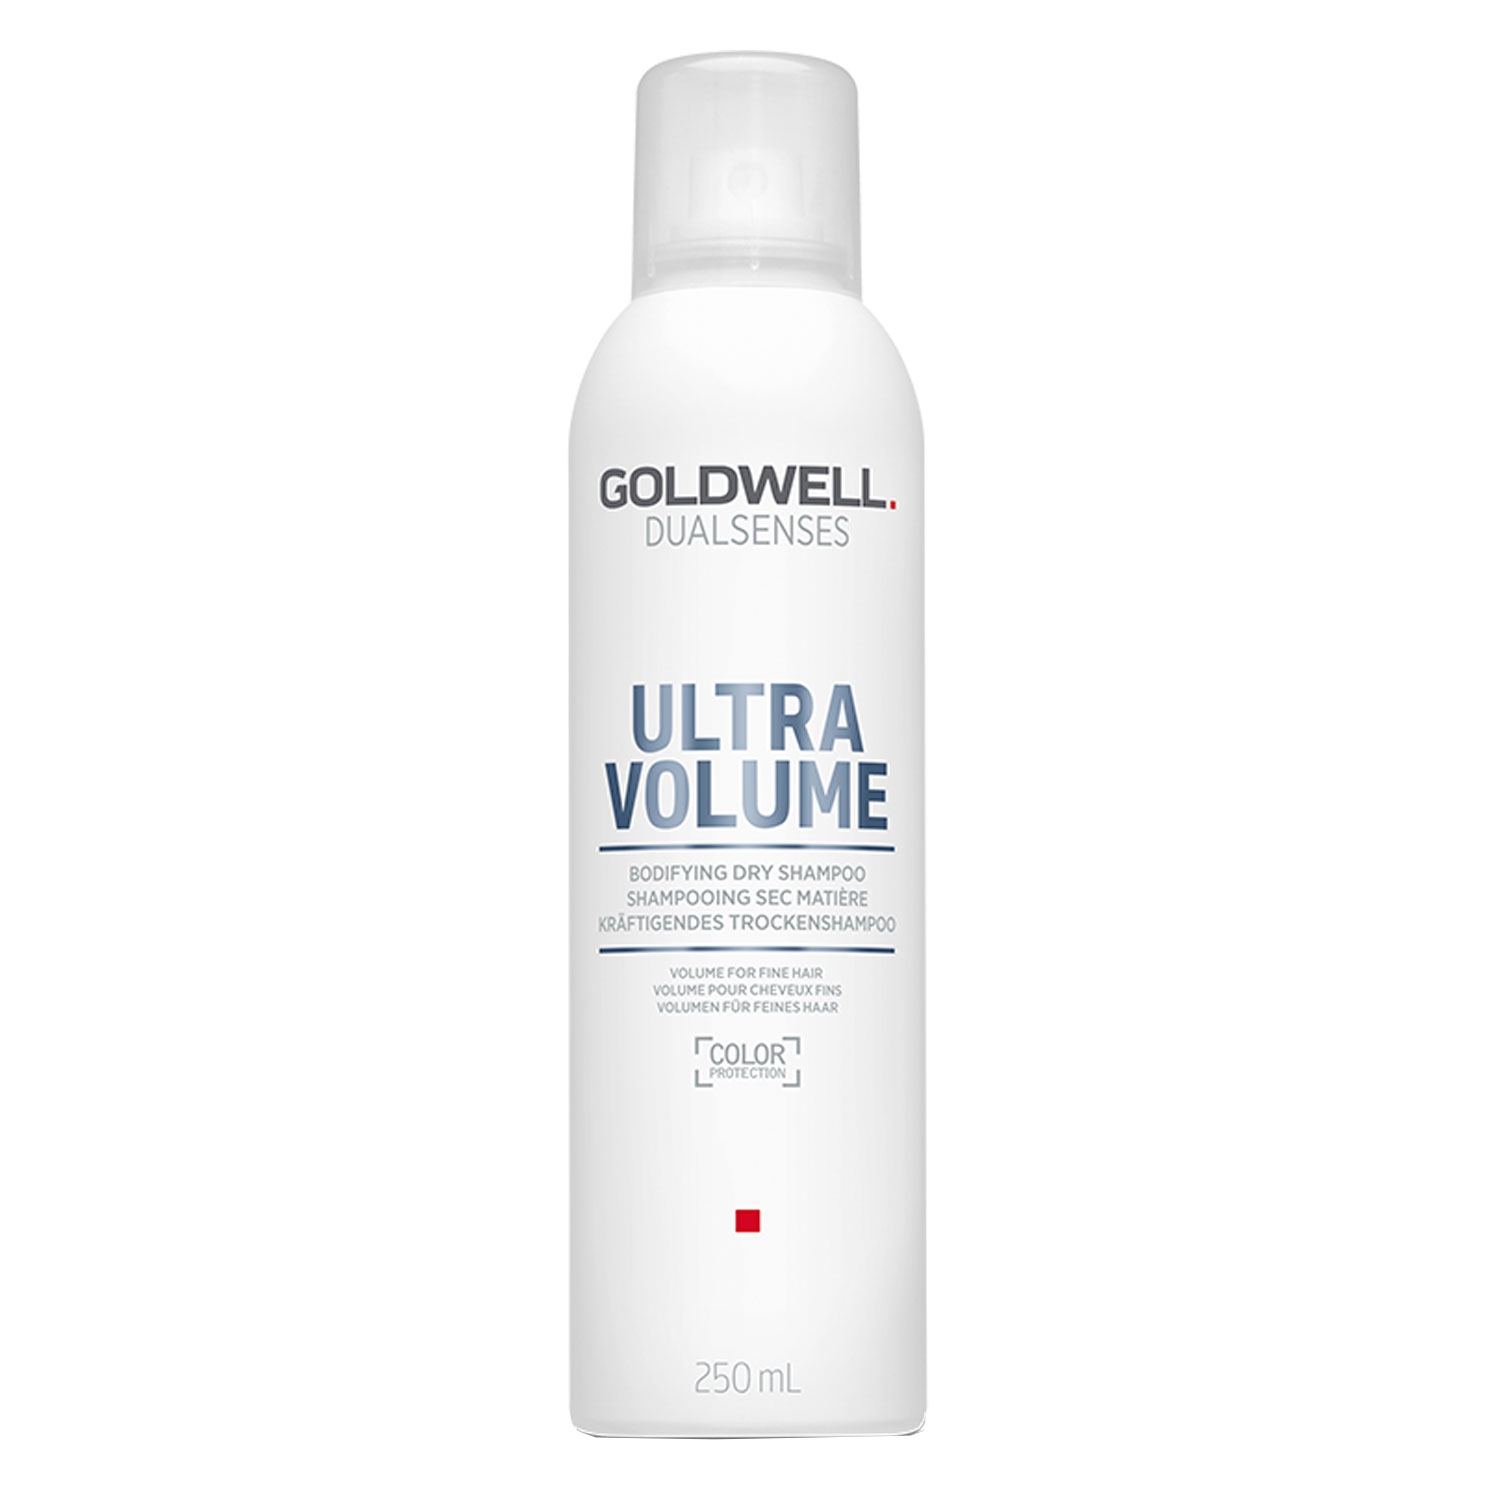 Product image from Dualsenses Ultra Volume - Bodifying Dry Shampoo